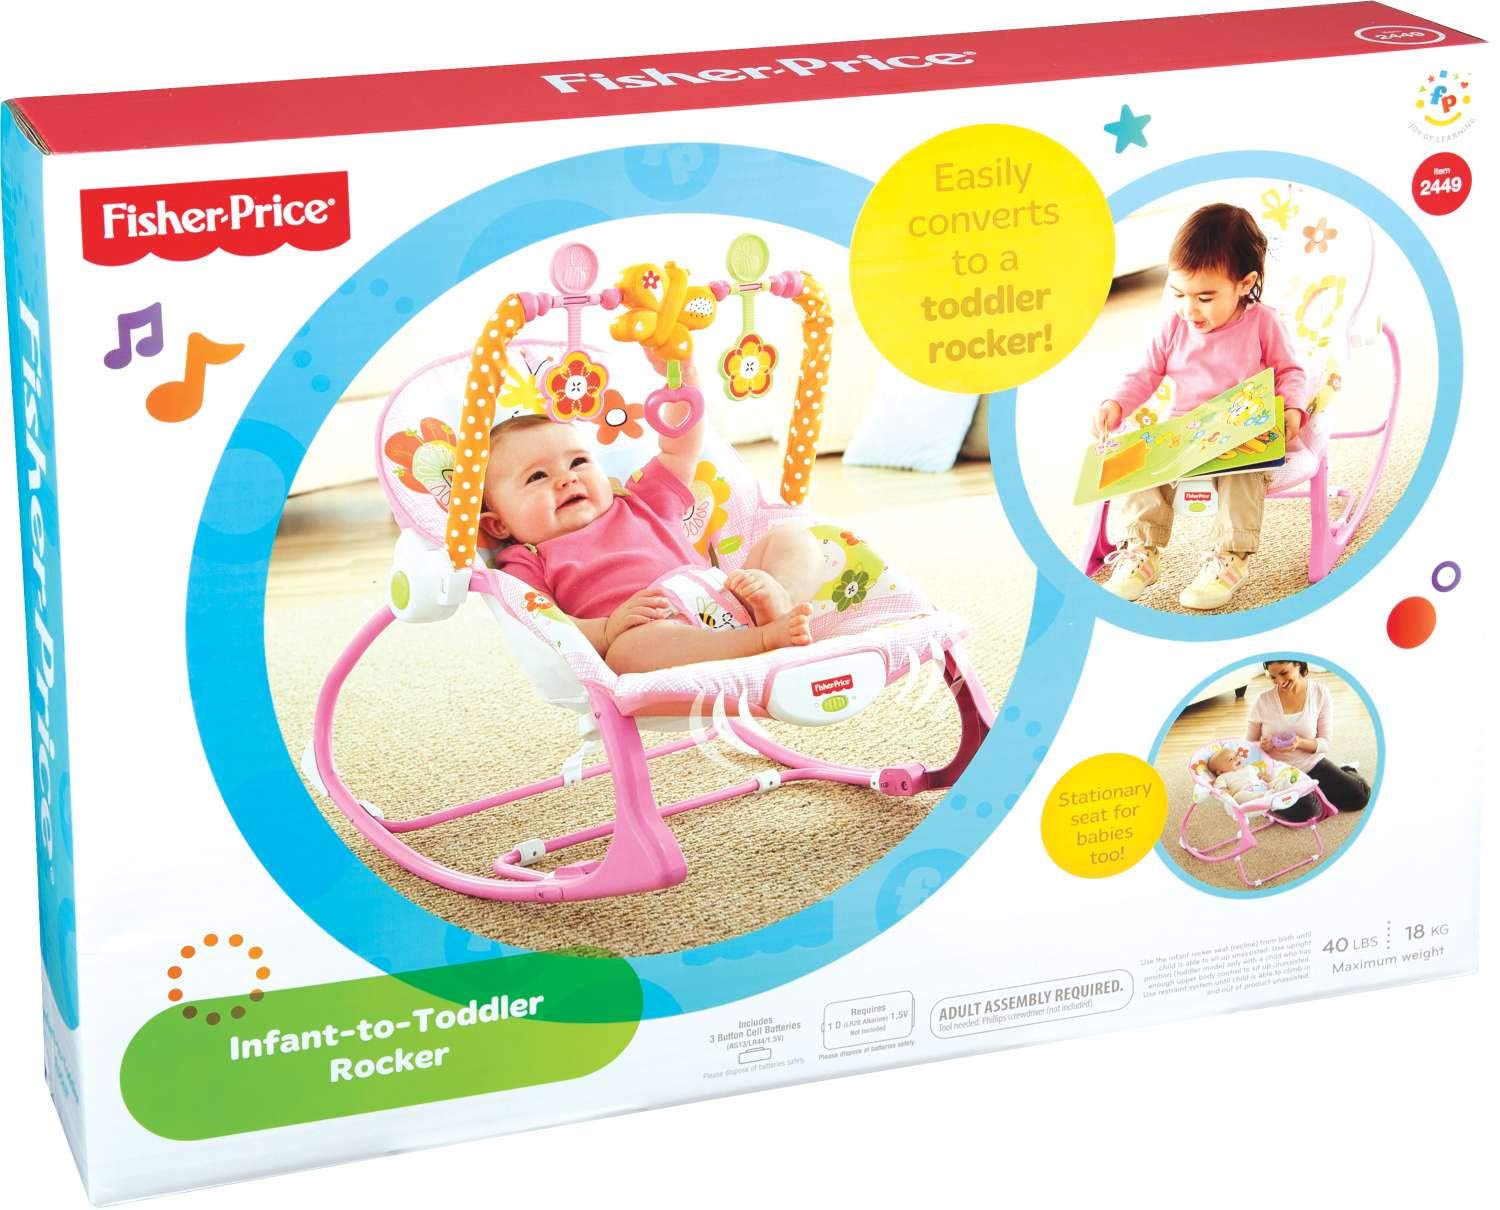 Fisher-Price Infant-to-Toddler Rocker Sleeper Pink Bunny Pattern